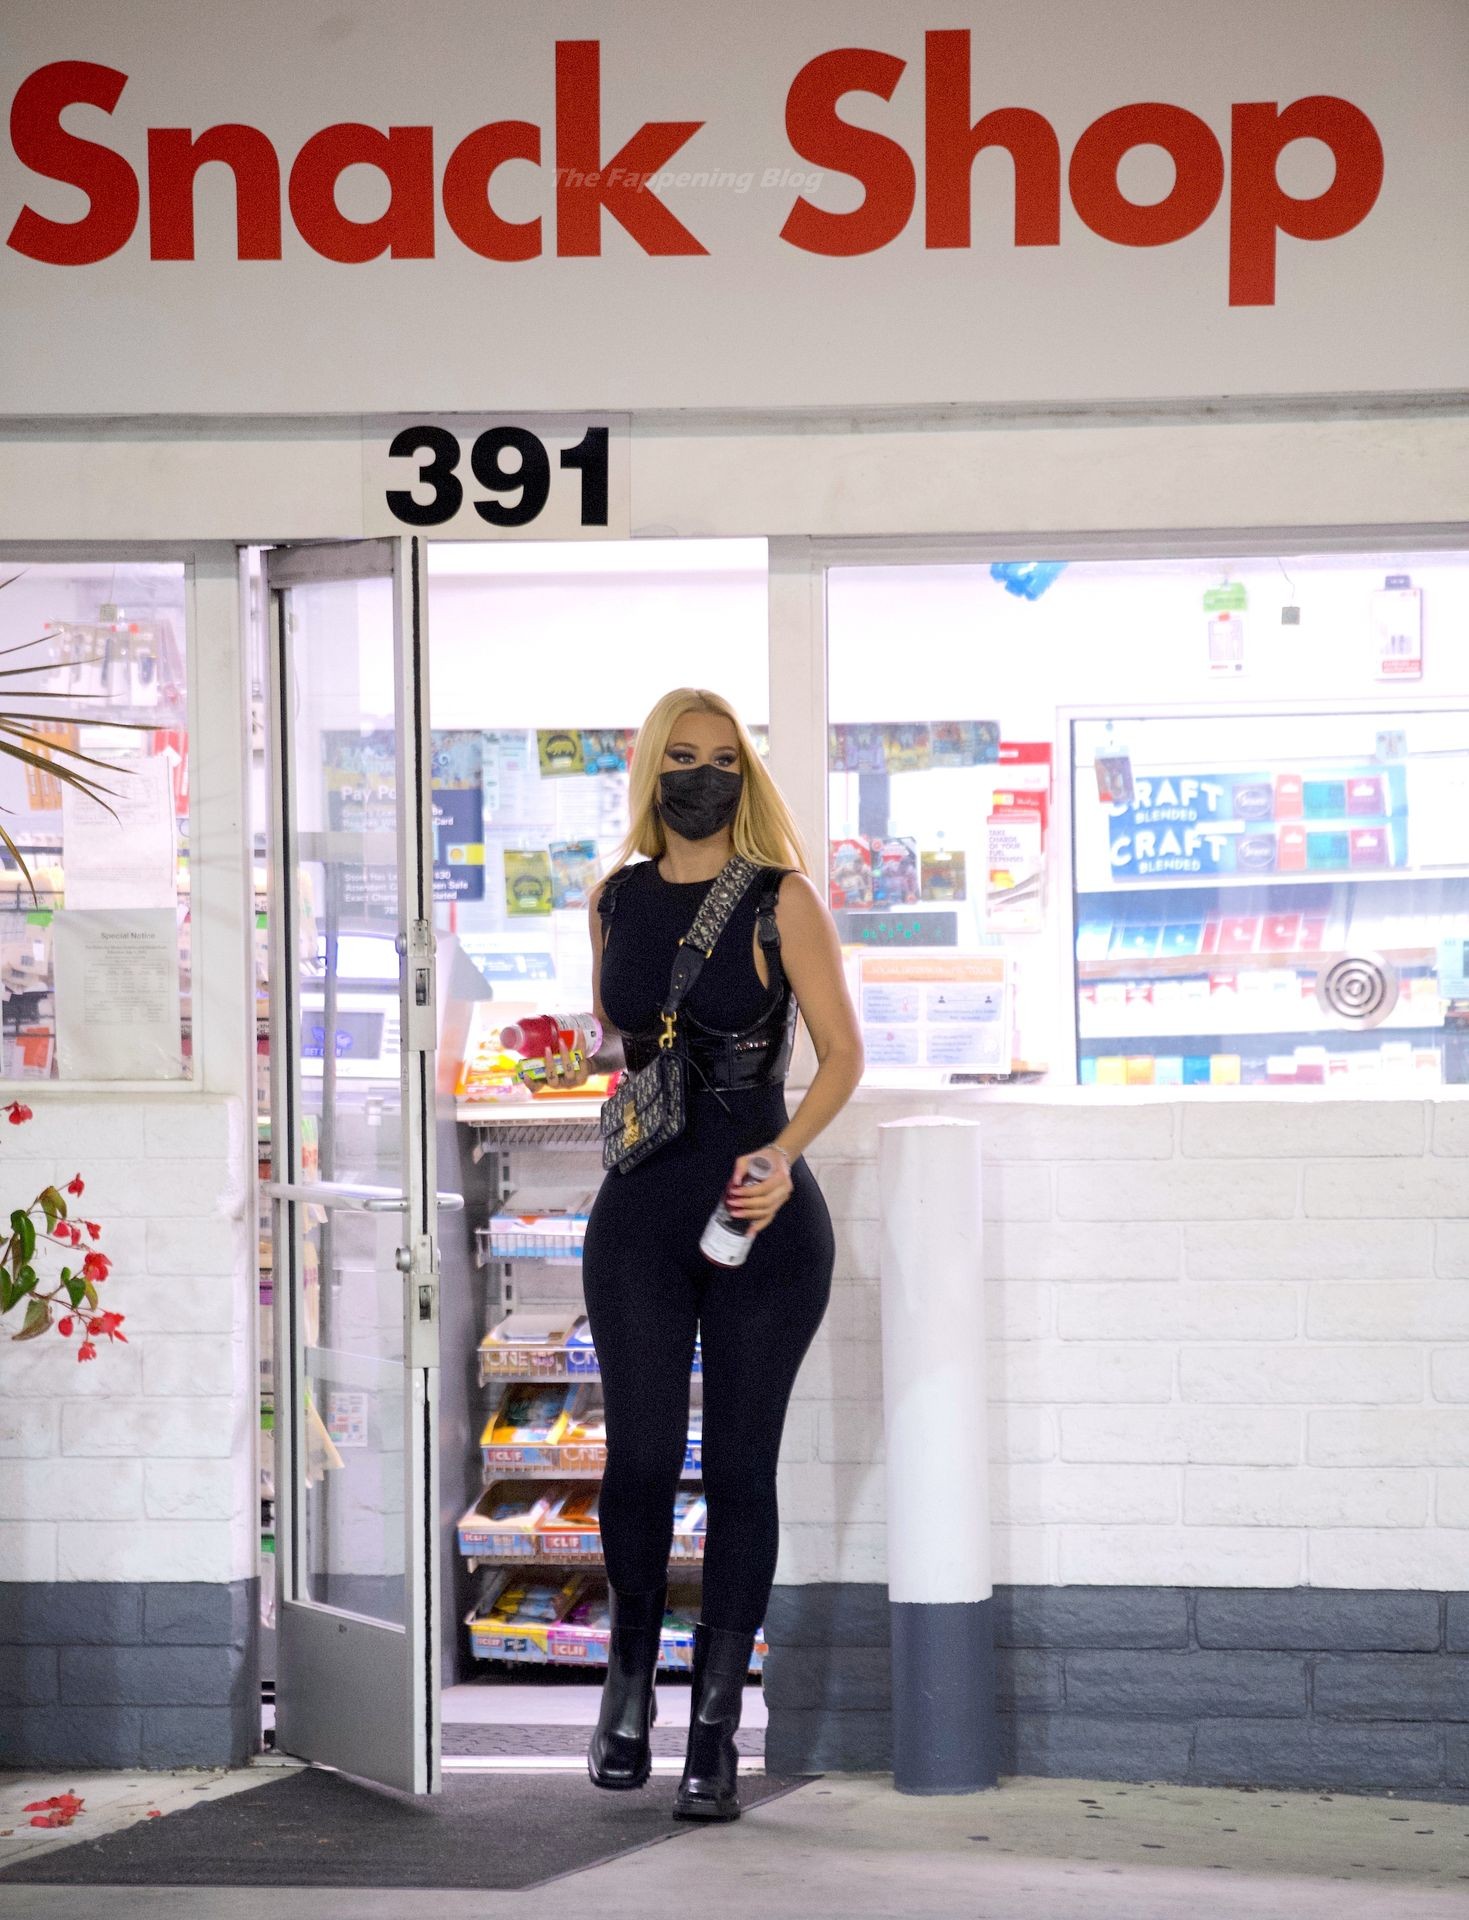 Iggy Azalea Stops For Gas and Snacks in Tight Bodysuit (20 Photos)